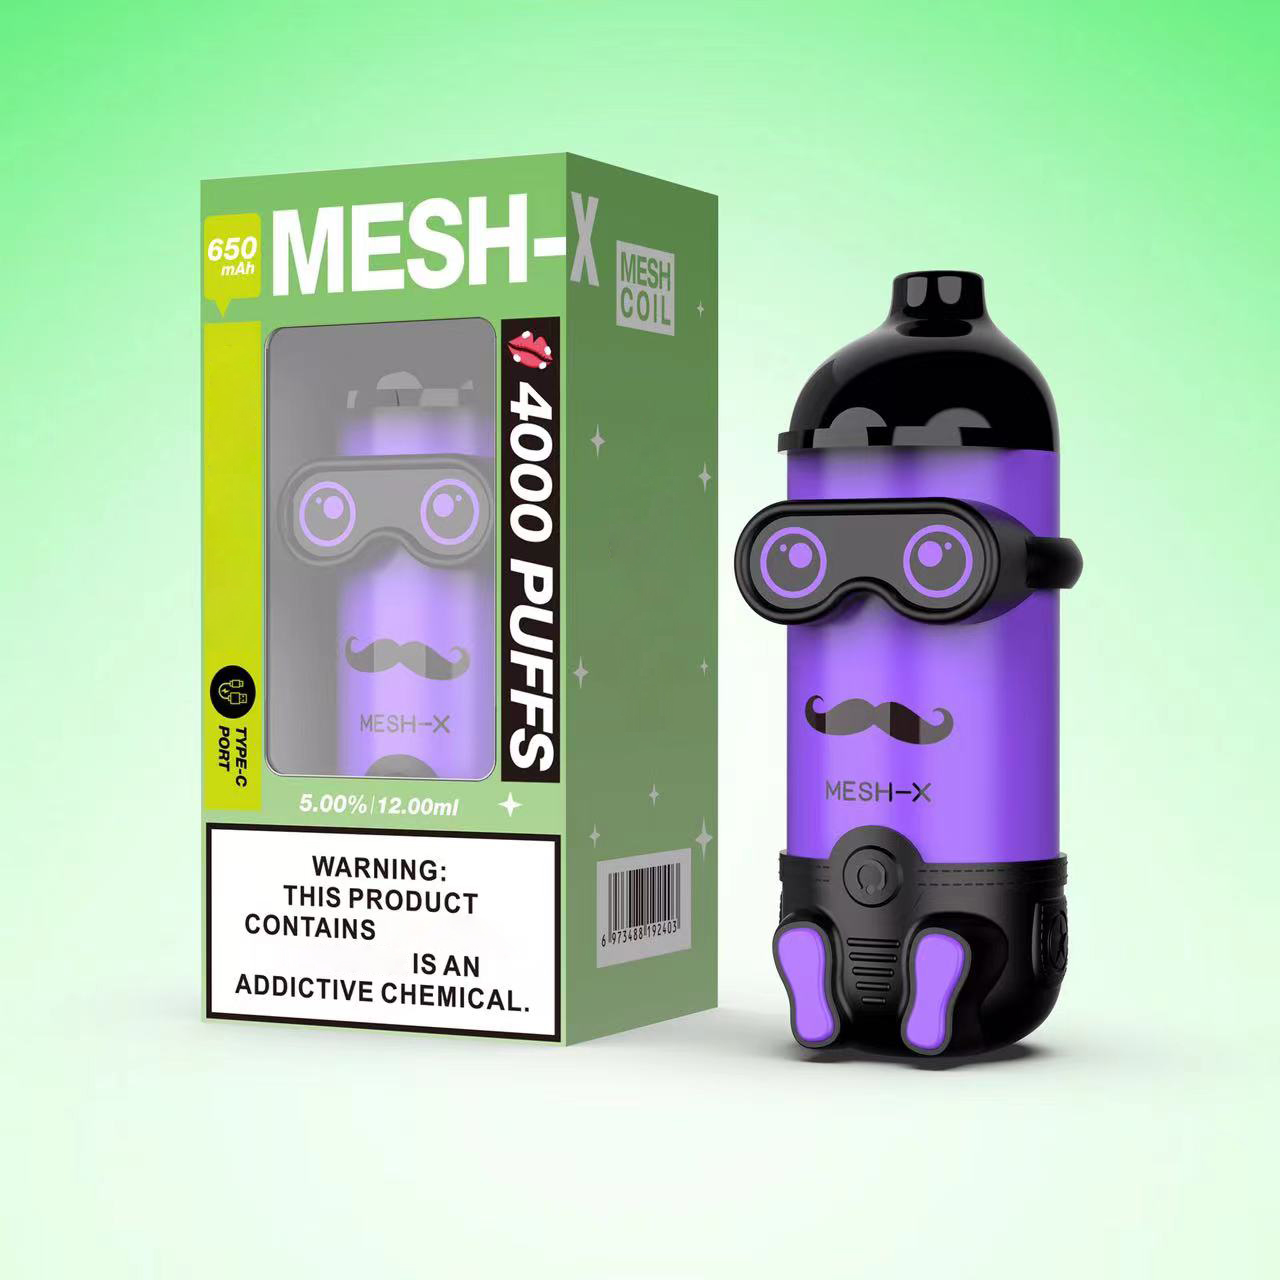 

Authentic MESHKING MESH-X Disposable E cigarettes Minions Cartoon Design 4000 Puffs Vape Pen 12ml Pre-filled Mesh Coil Pods Vaporizers 650mA